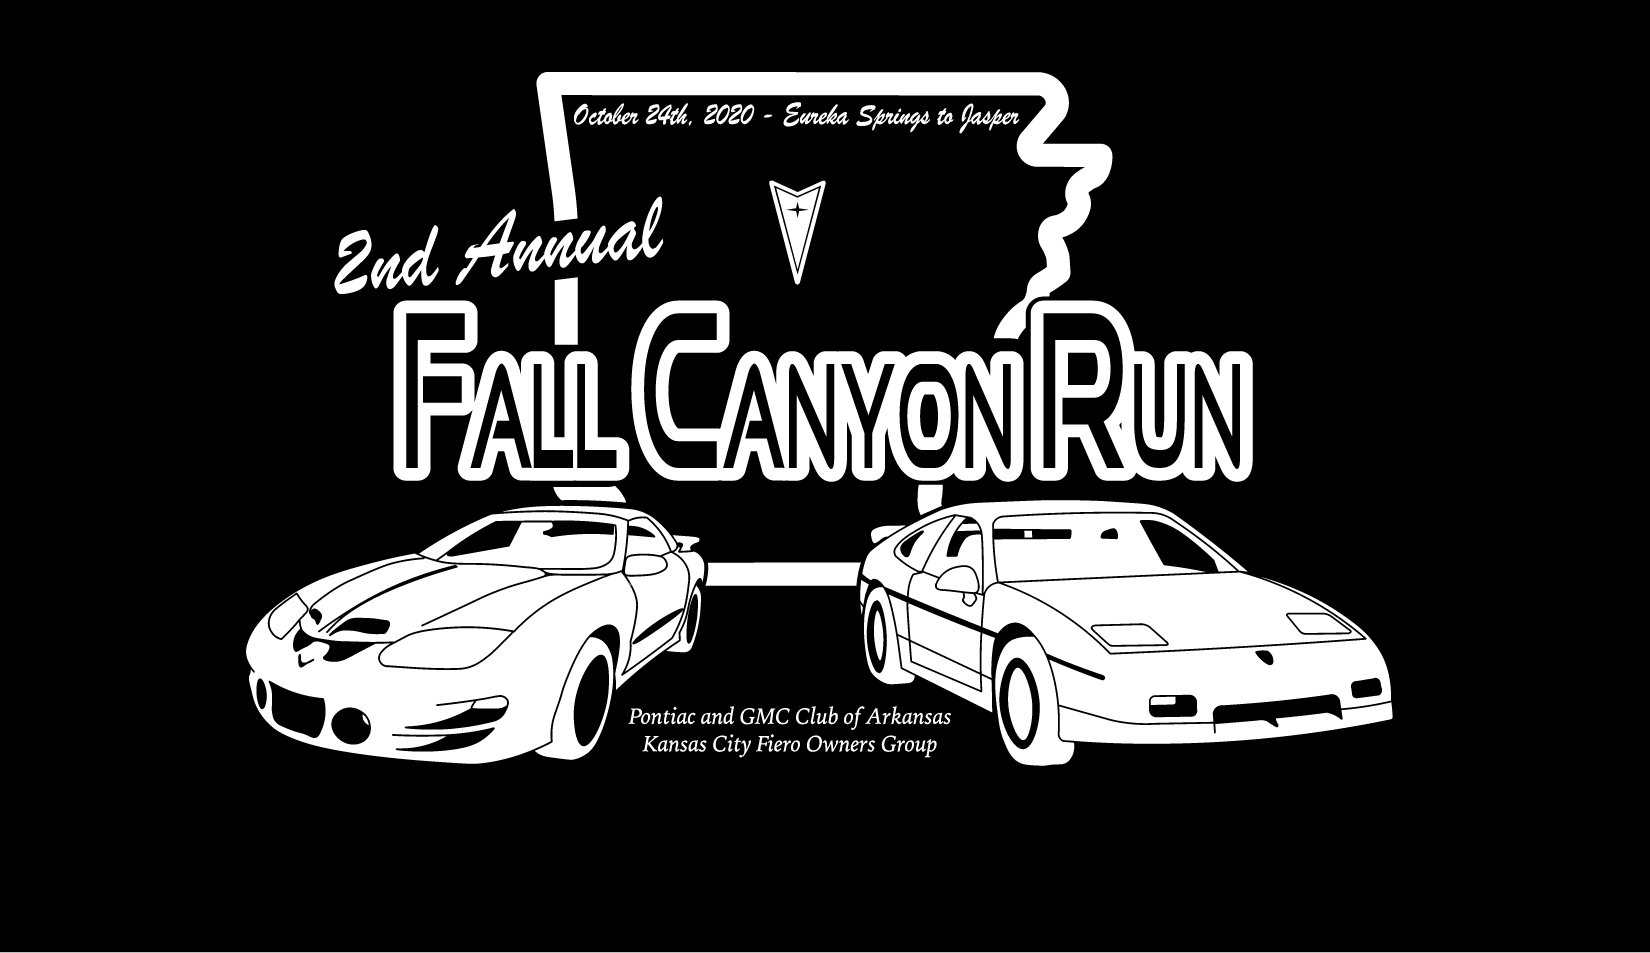 North West Arkansas Pontiac Fall Canyon Run T-Shirt